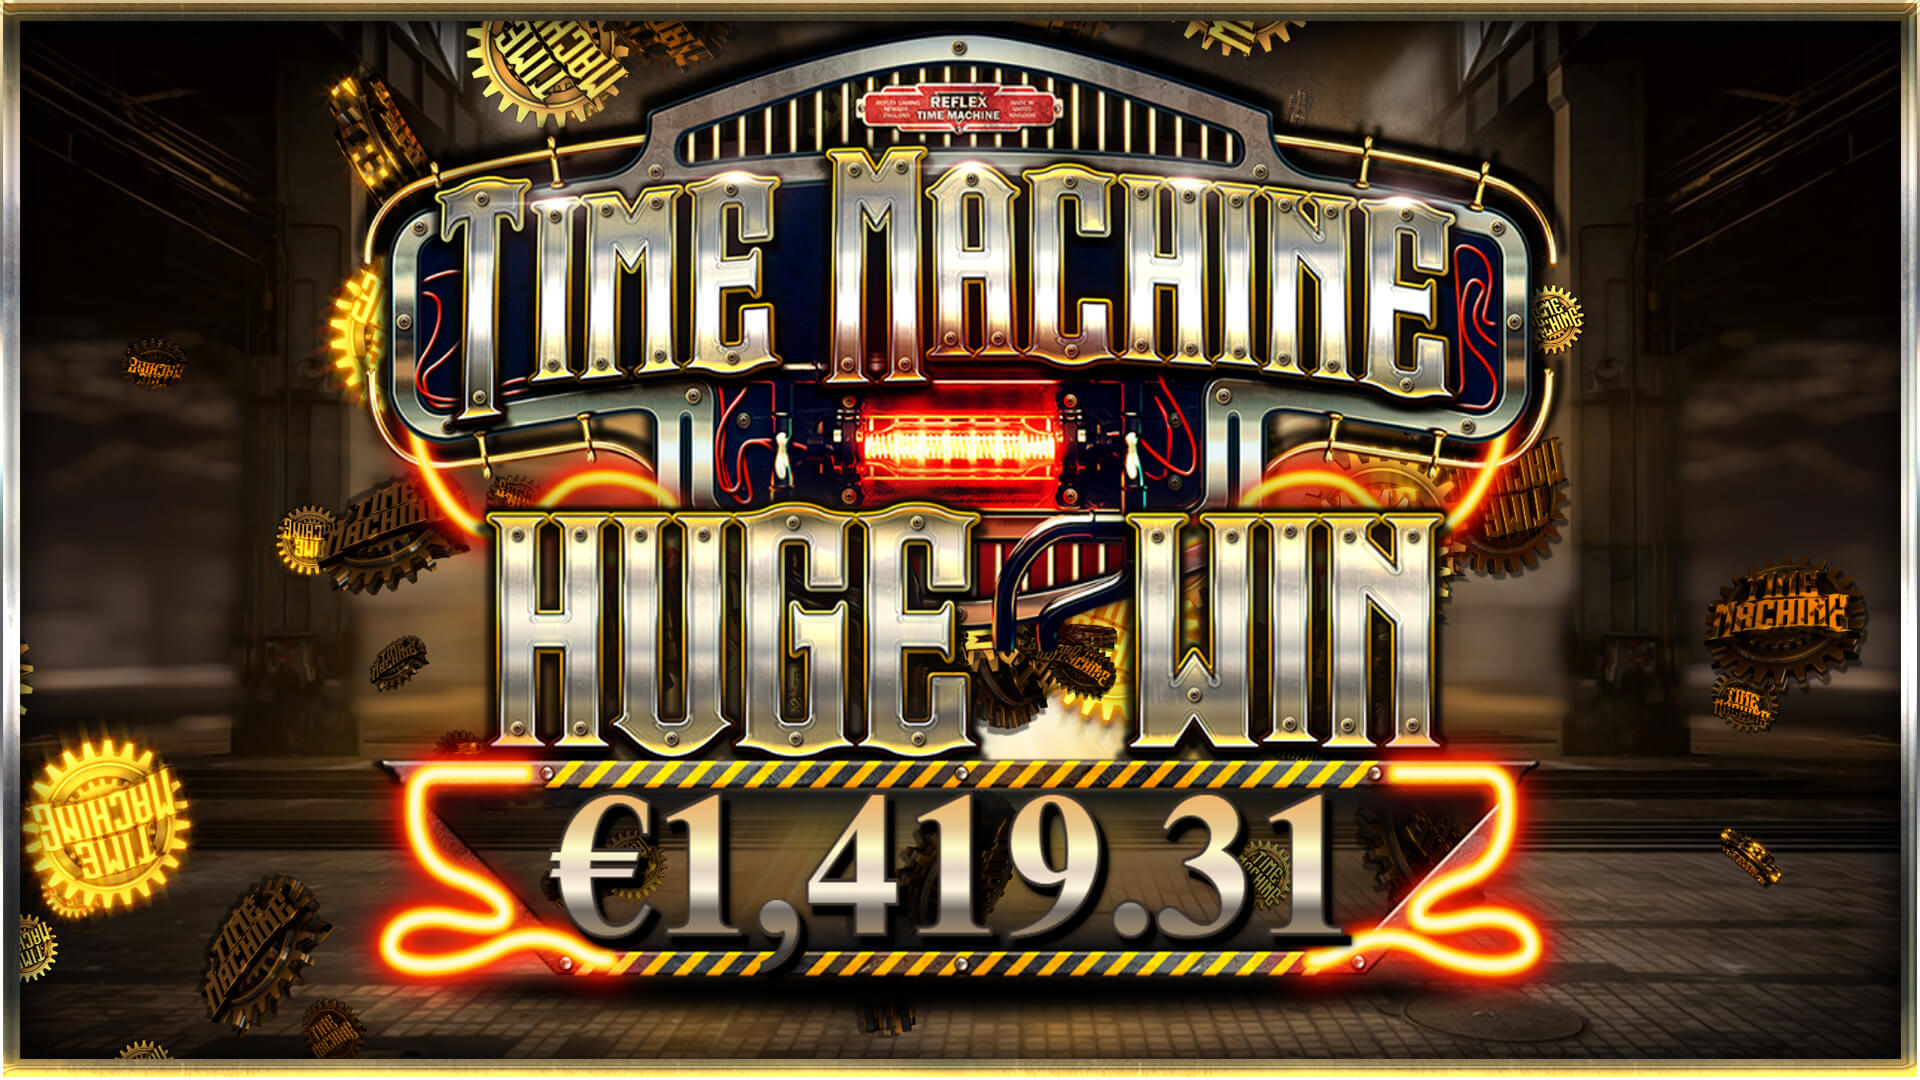 Time Machine slot